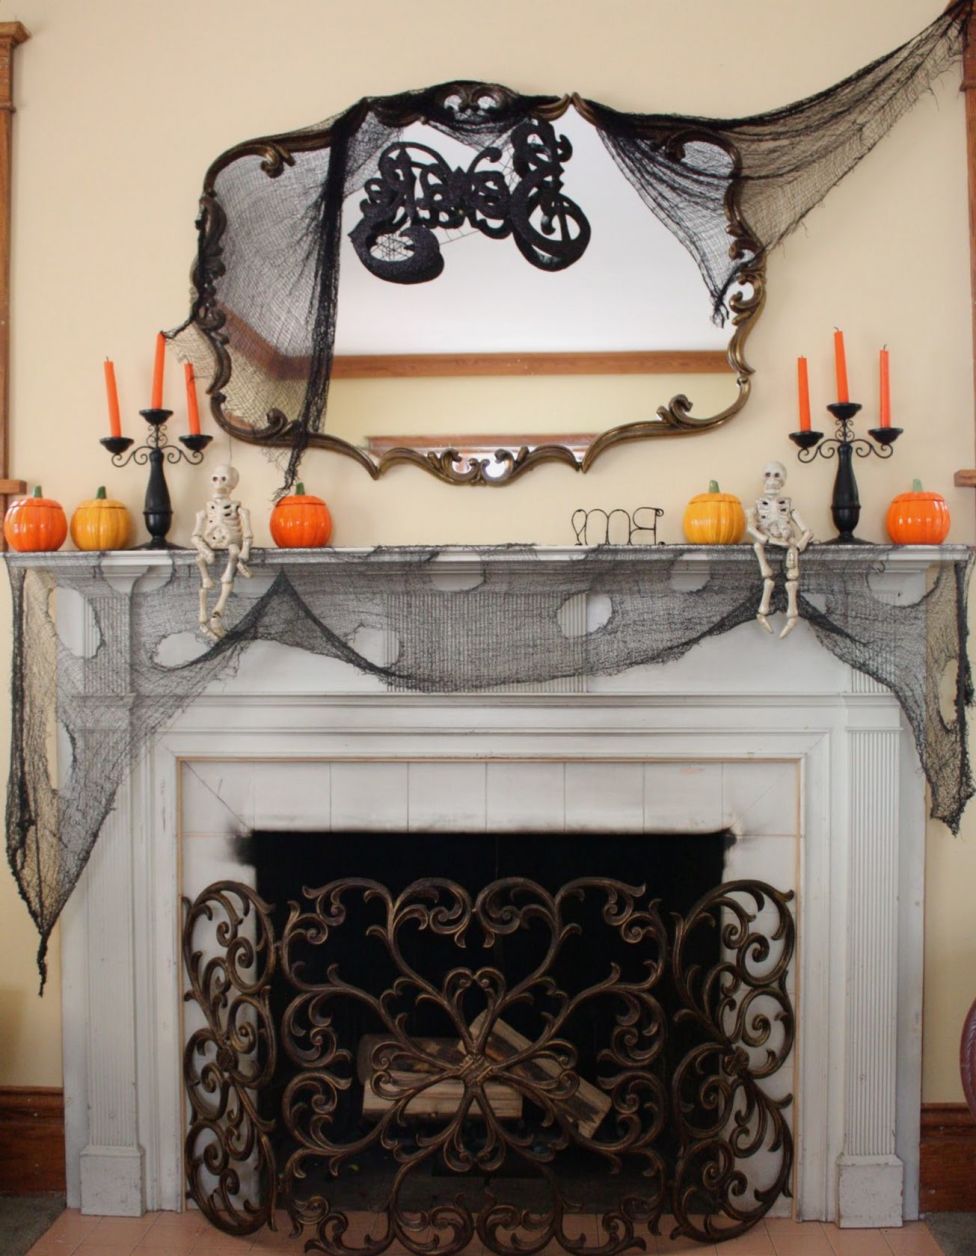 Cool Mantel Halloween Decorations